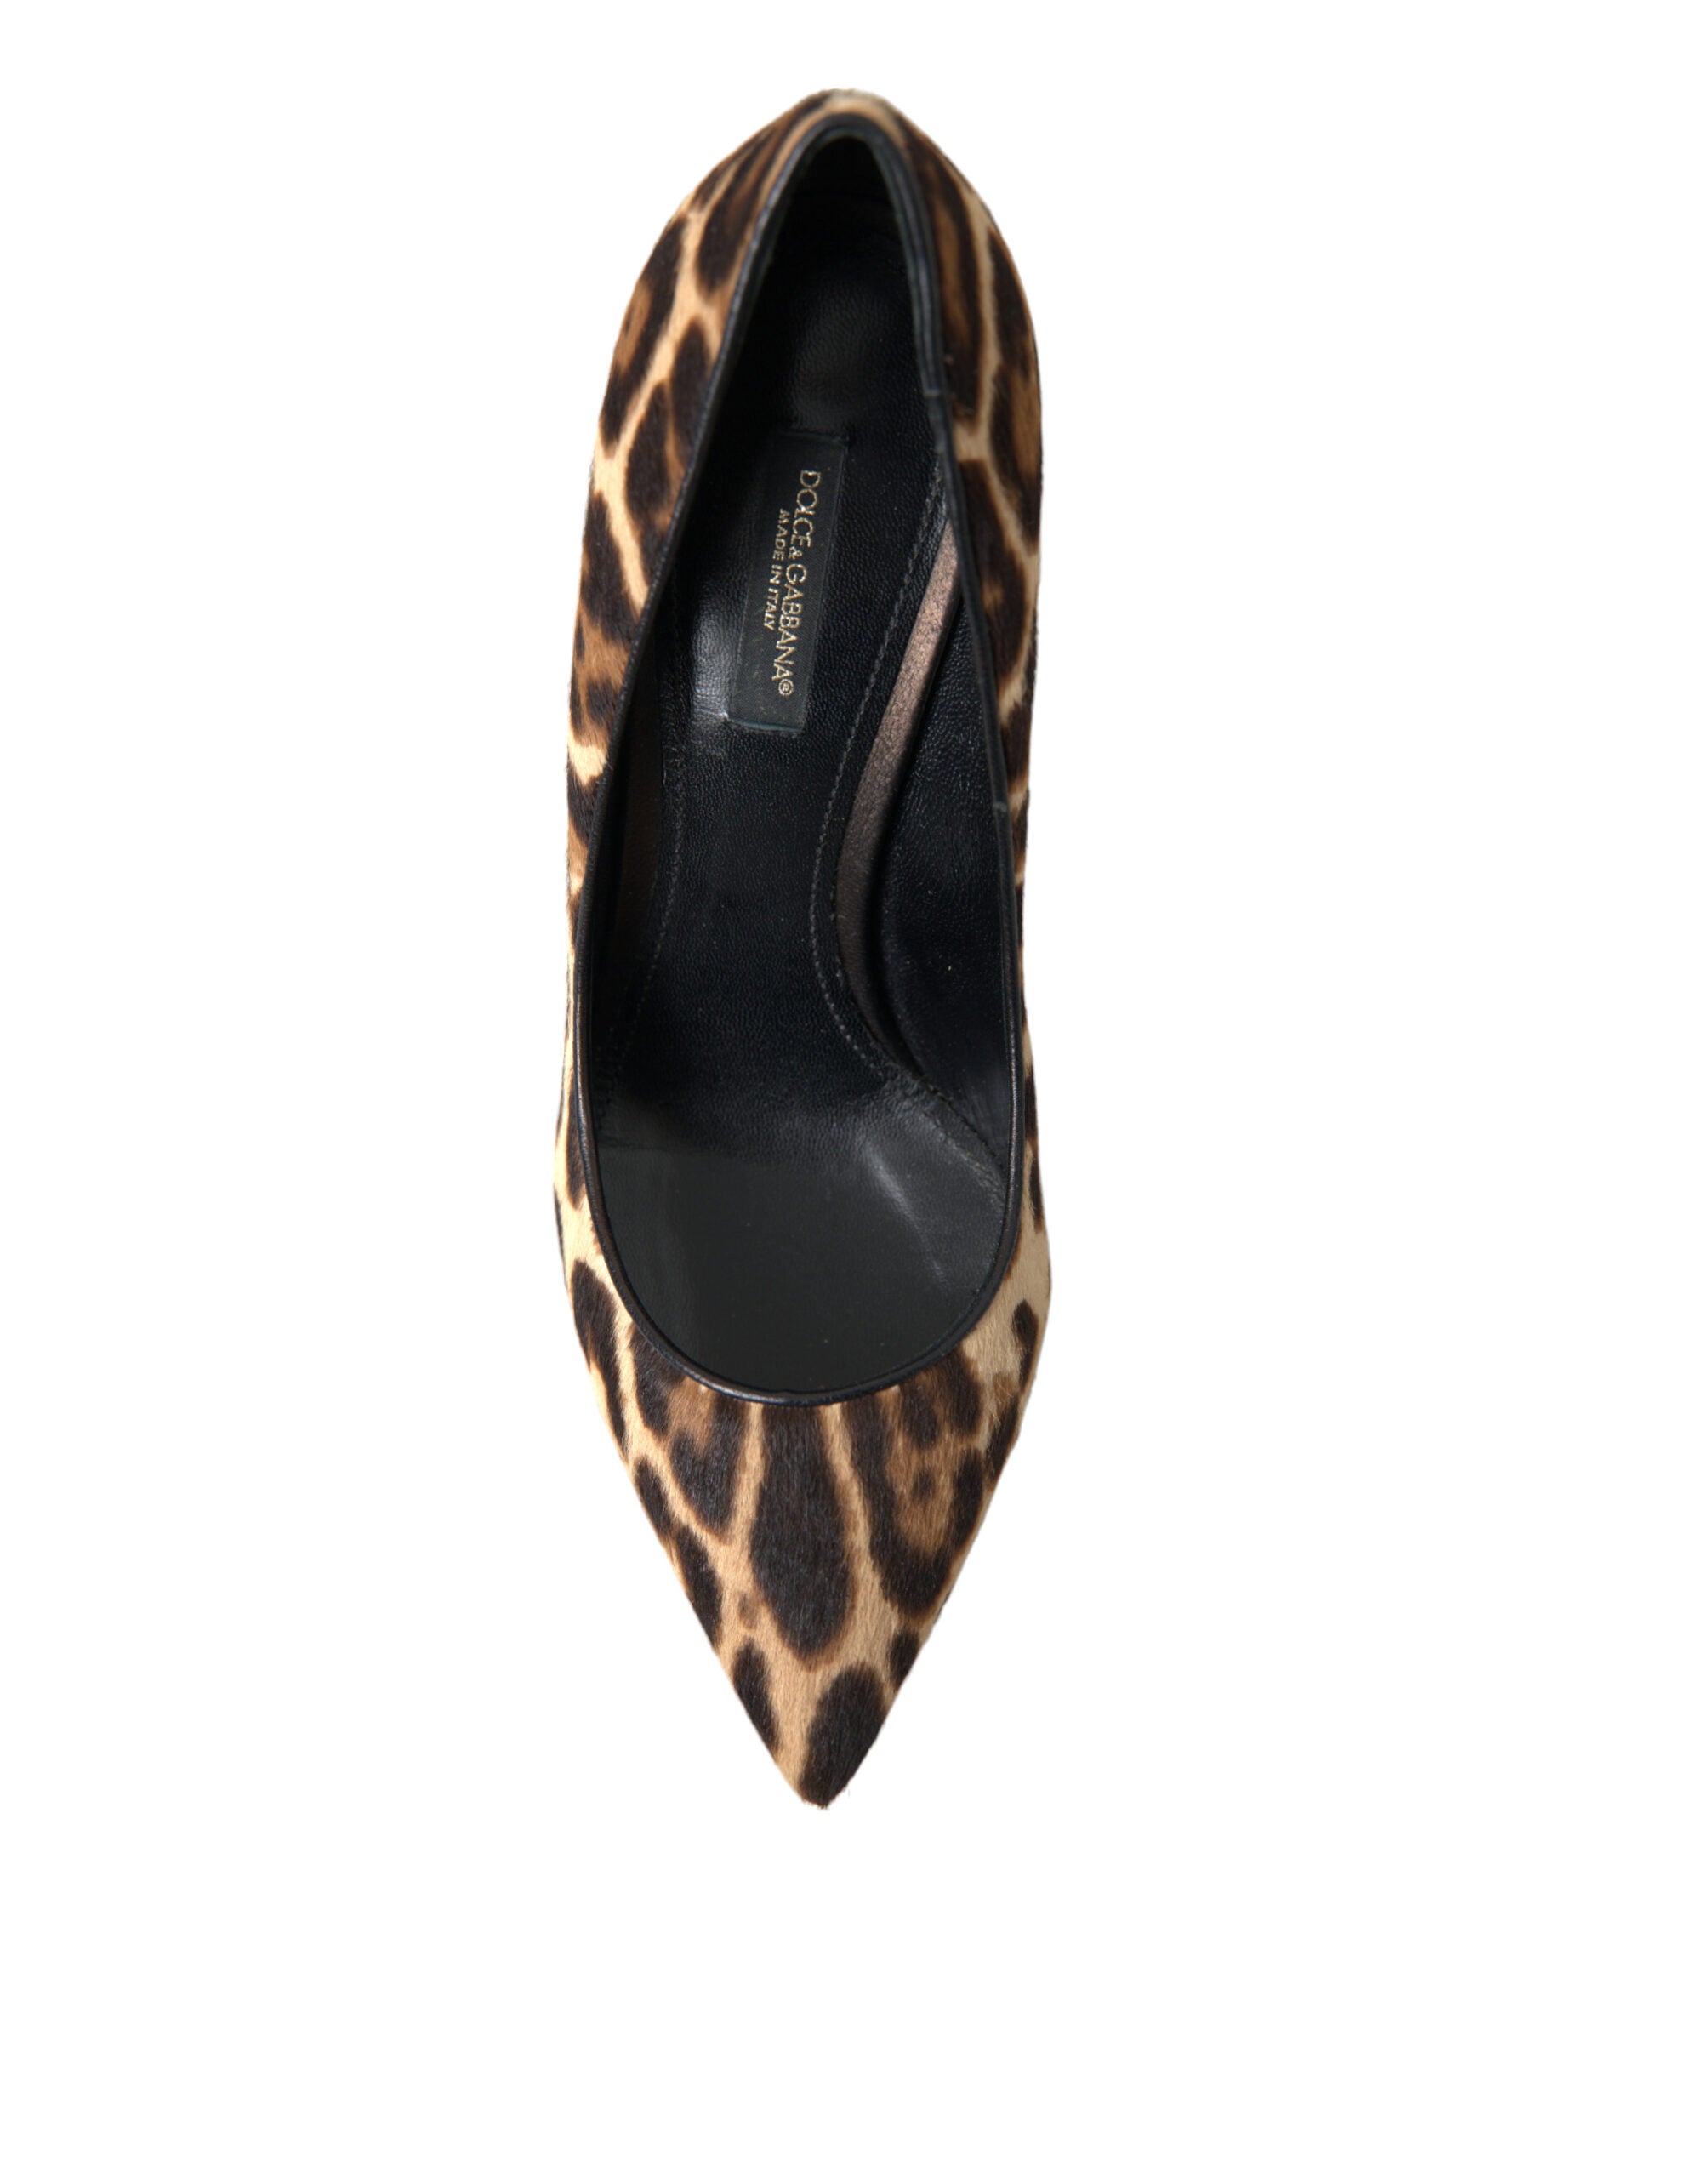 Exquisite Leopard Print Stiletto Pumps - Divitiae Glamour